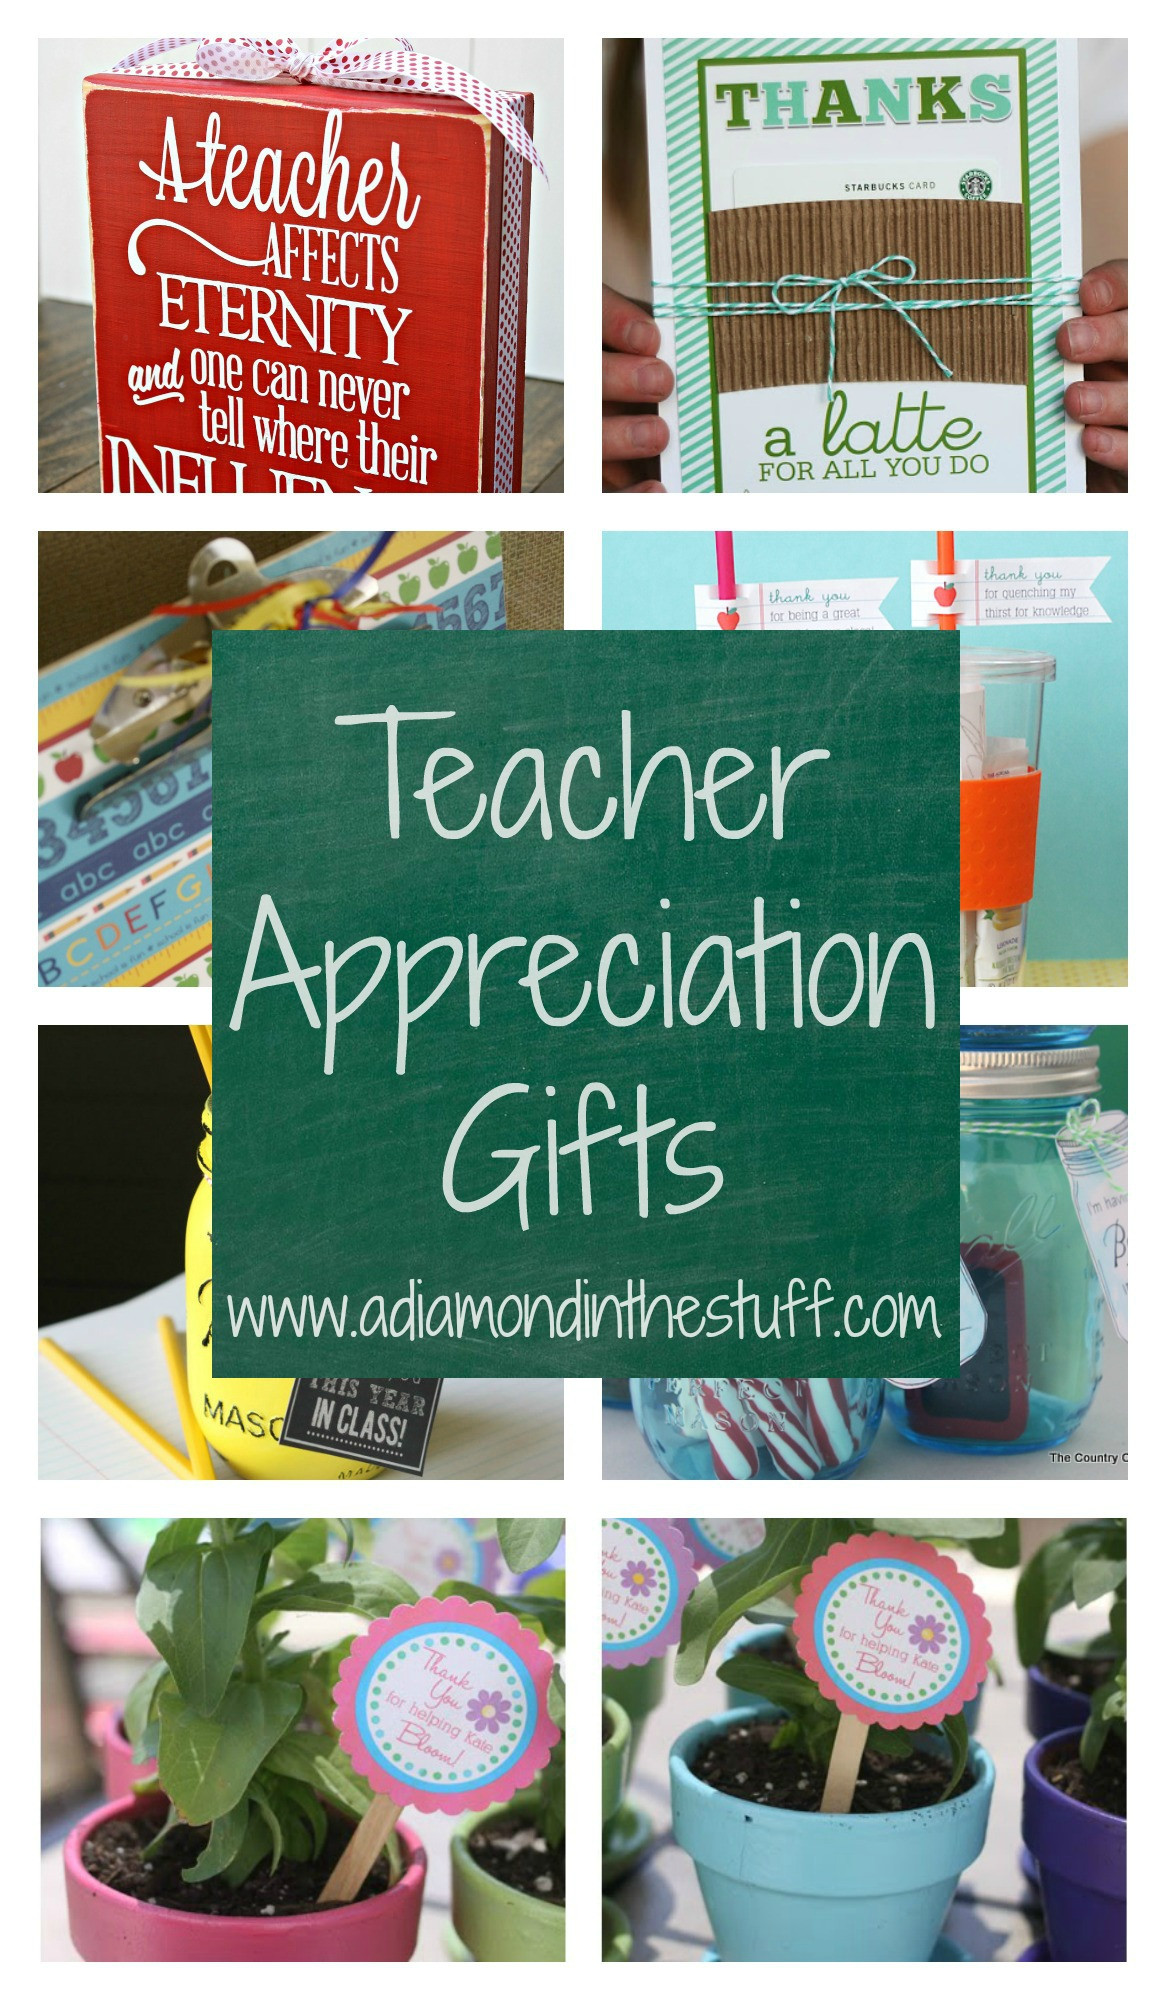 Teacher Appreciation Gifts DIY
 DIY Teacher Appreciation Gifts – A Diamond in the Stuff